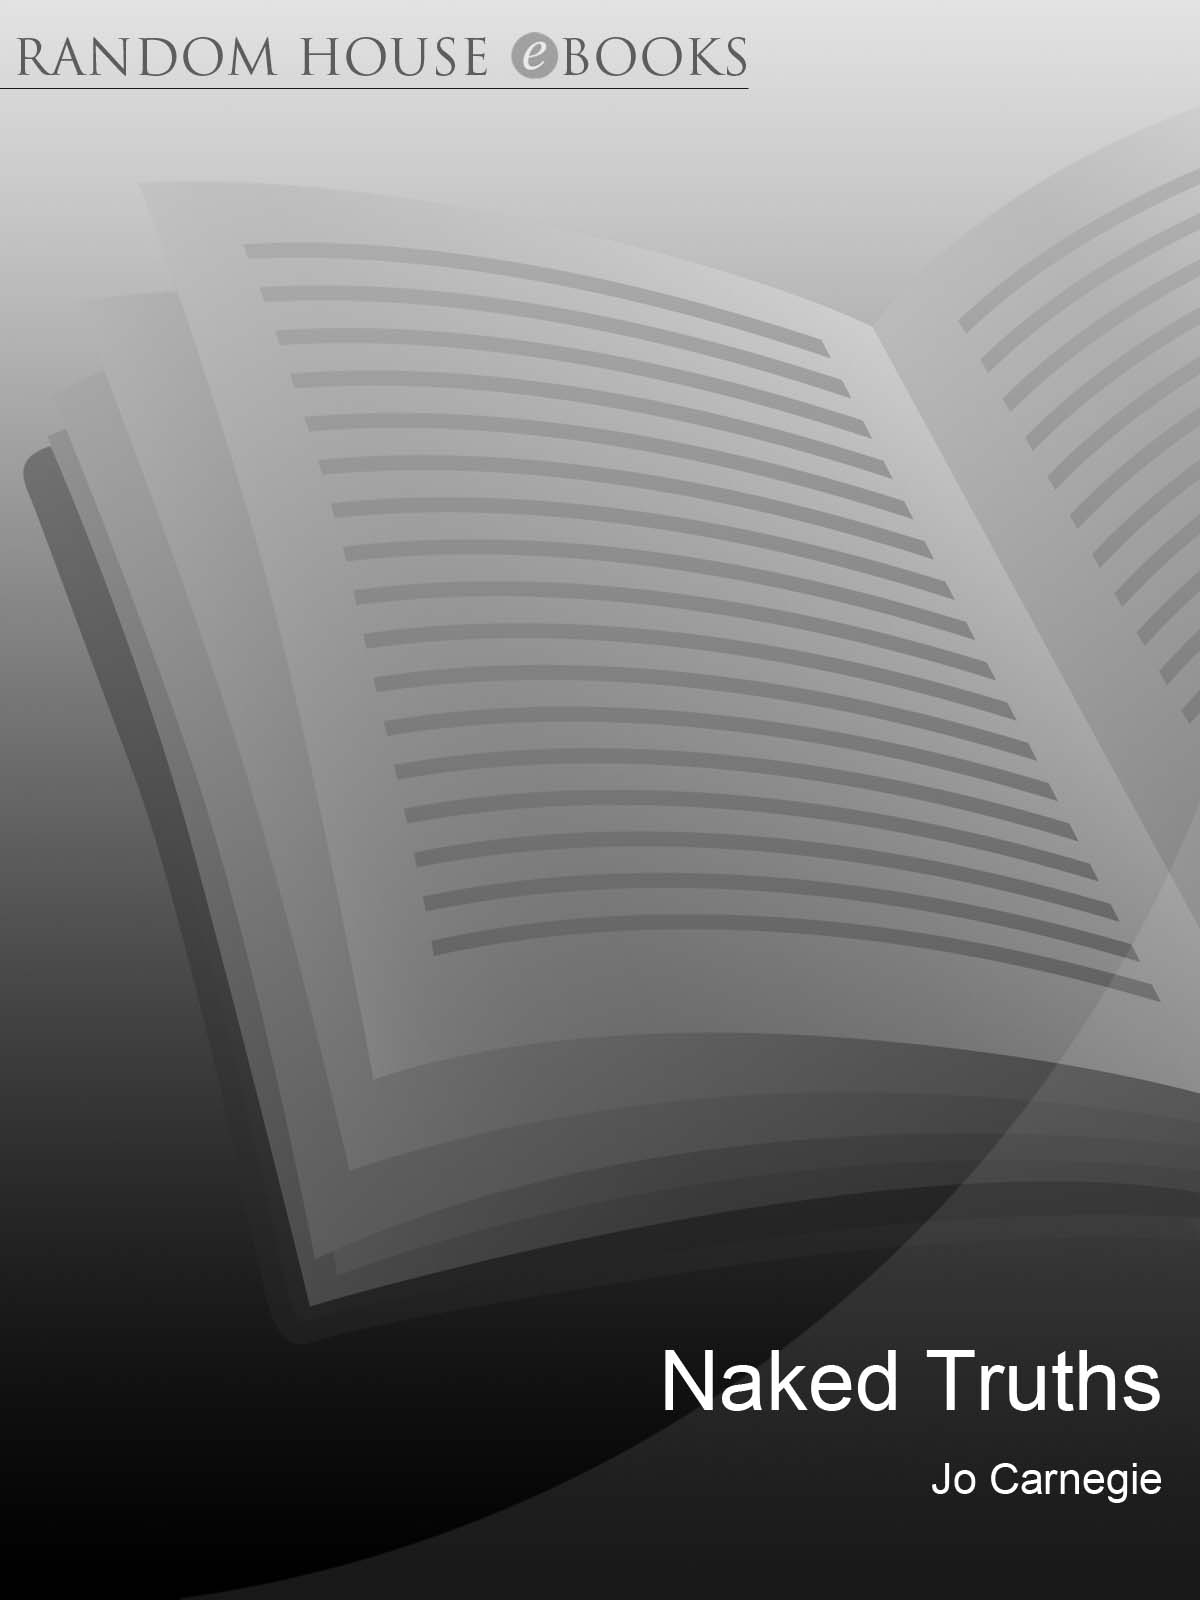 Naked Truths (2009) by Jo Carnegie